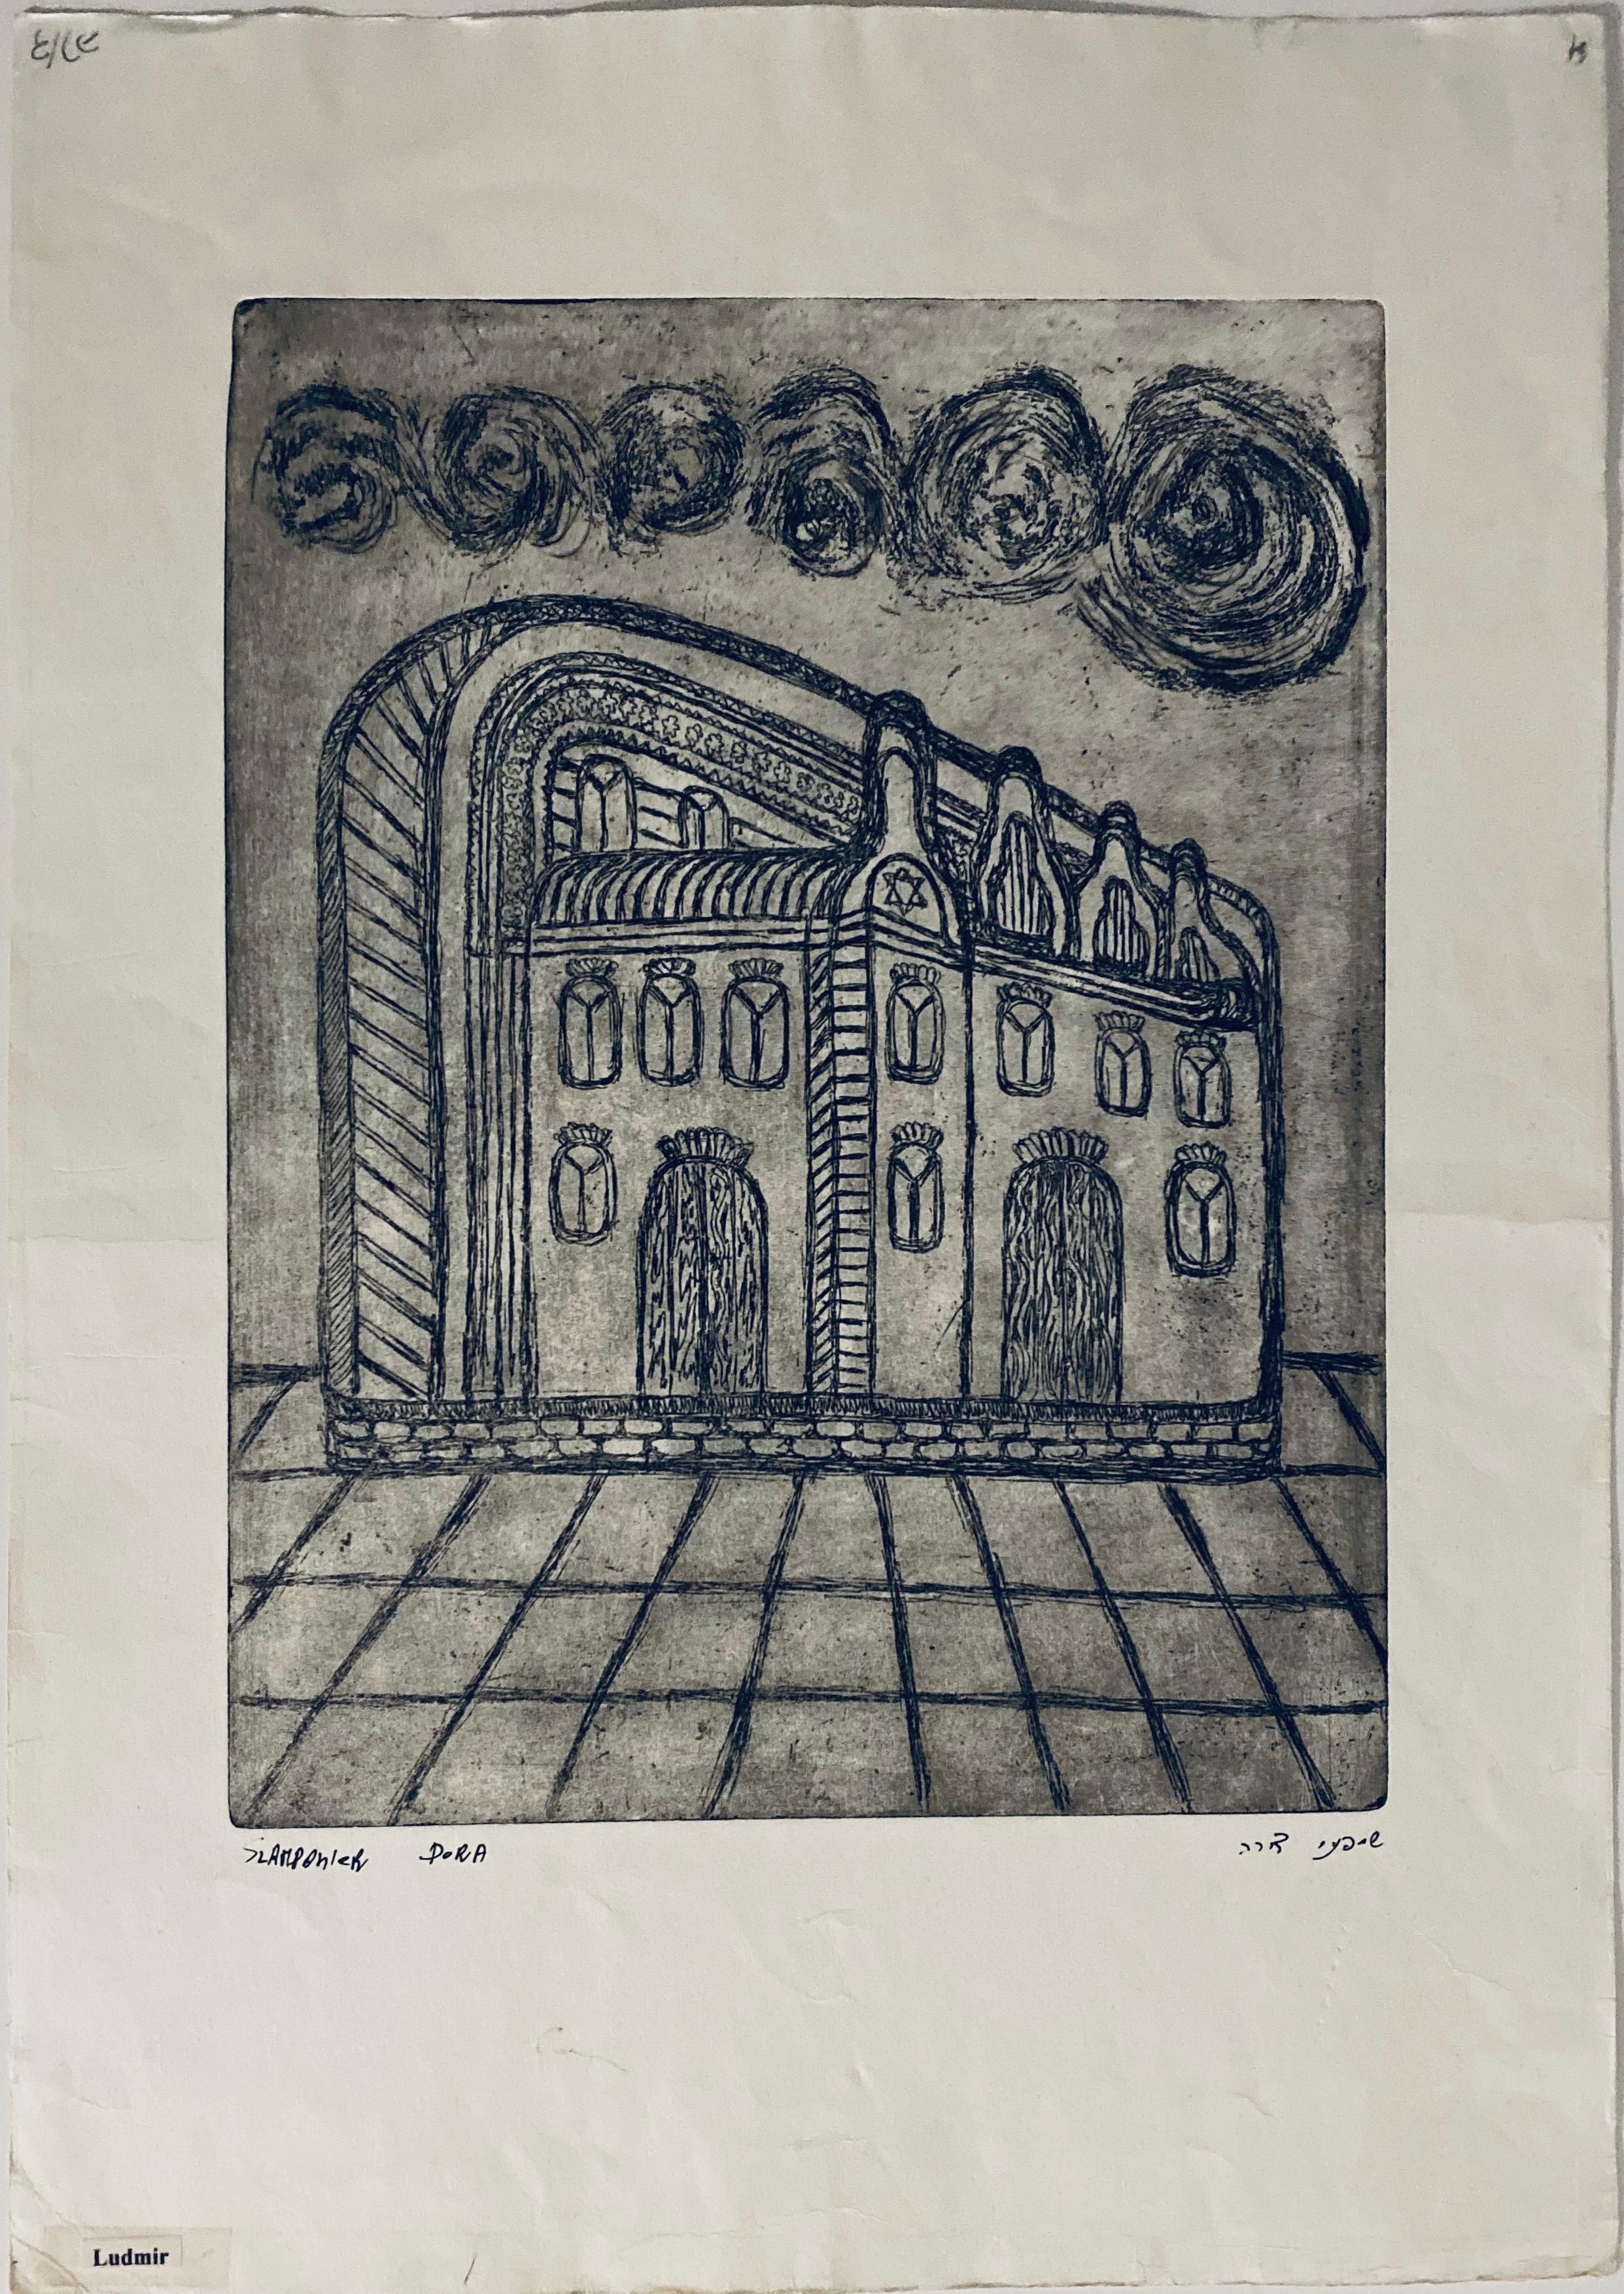 Etching of destroyed synagogue - Ludmir, Poland  - Print by Dora Szampanier